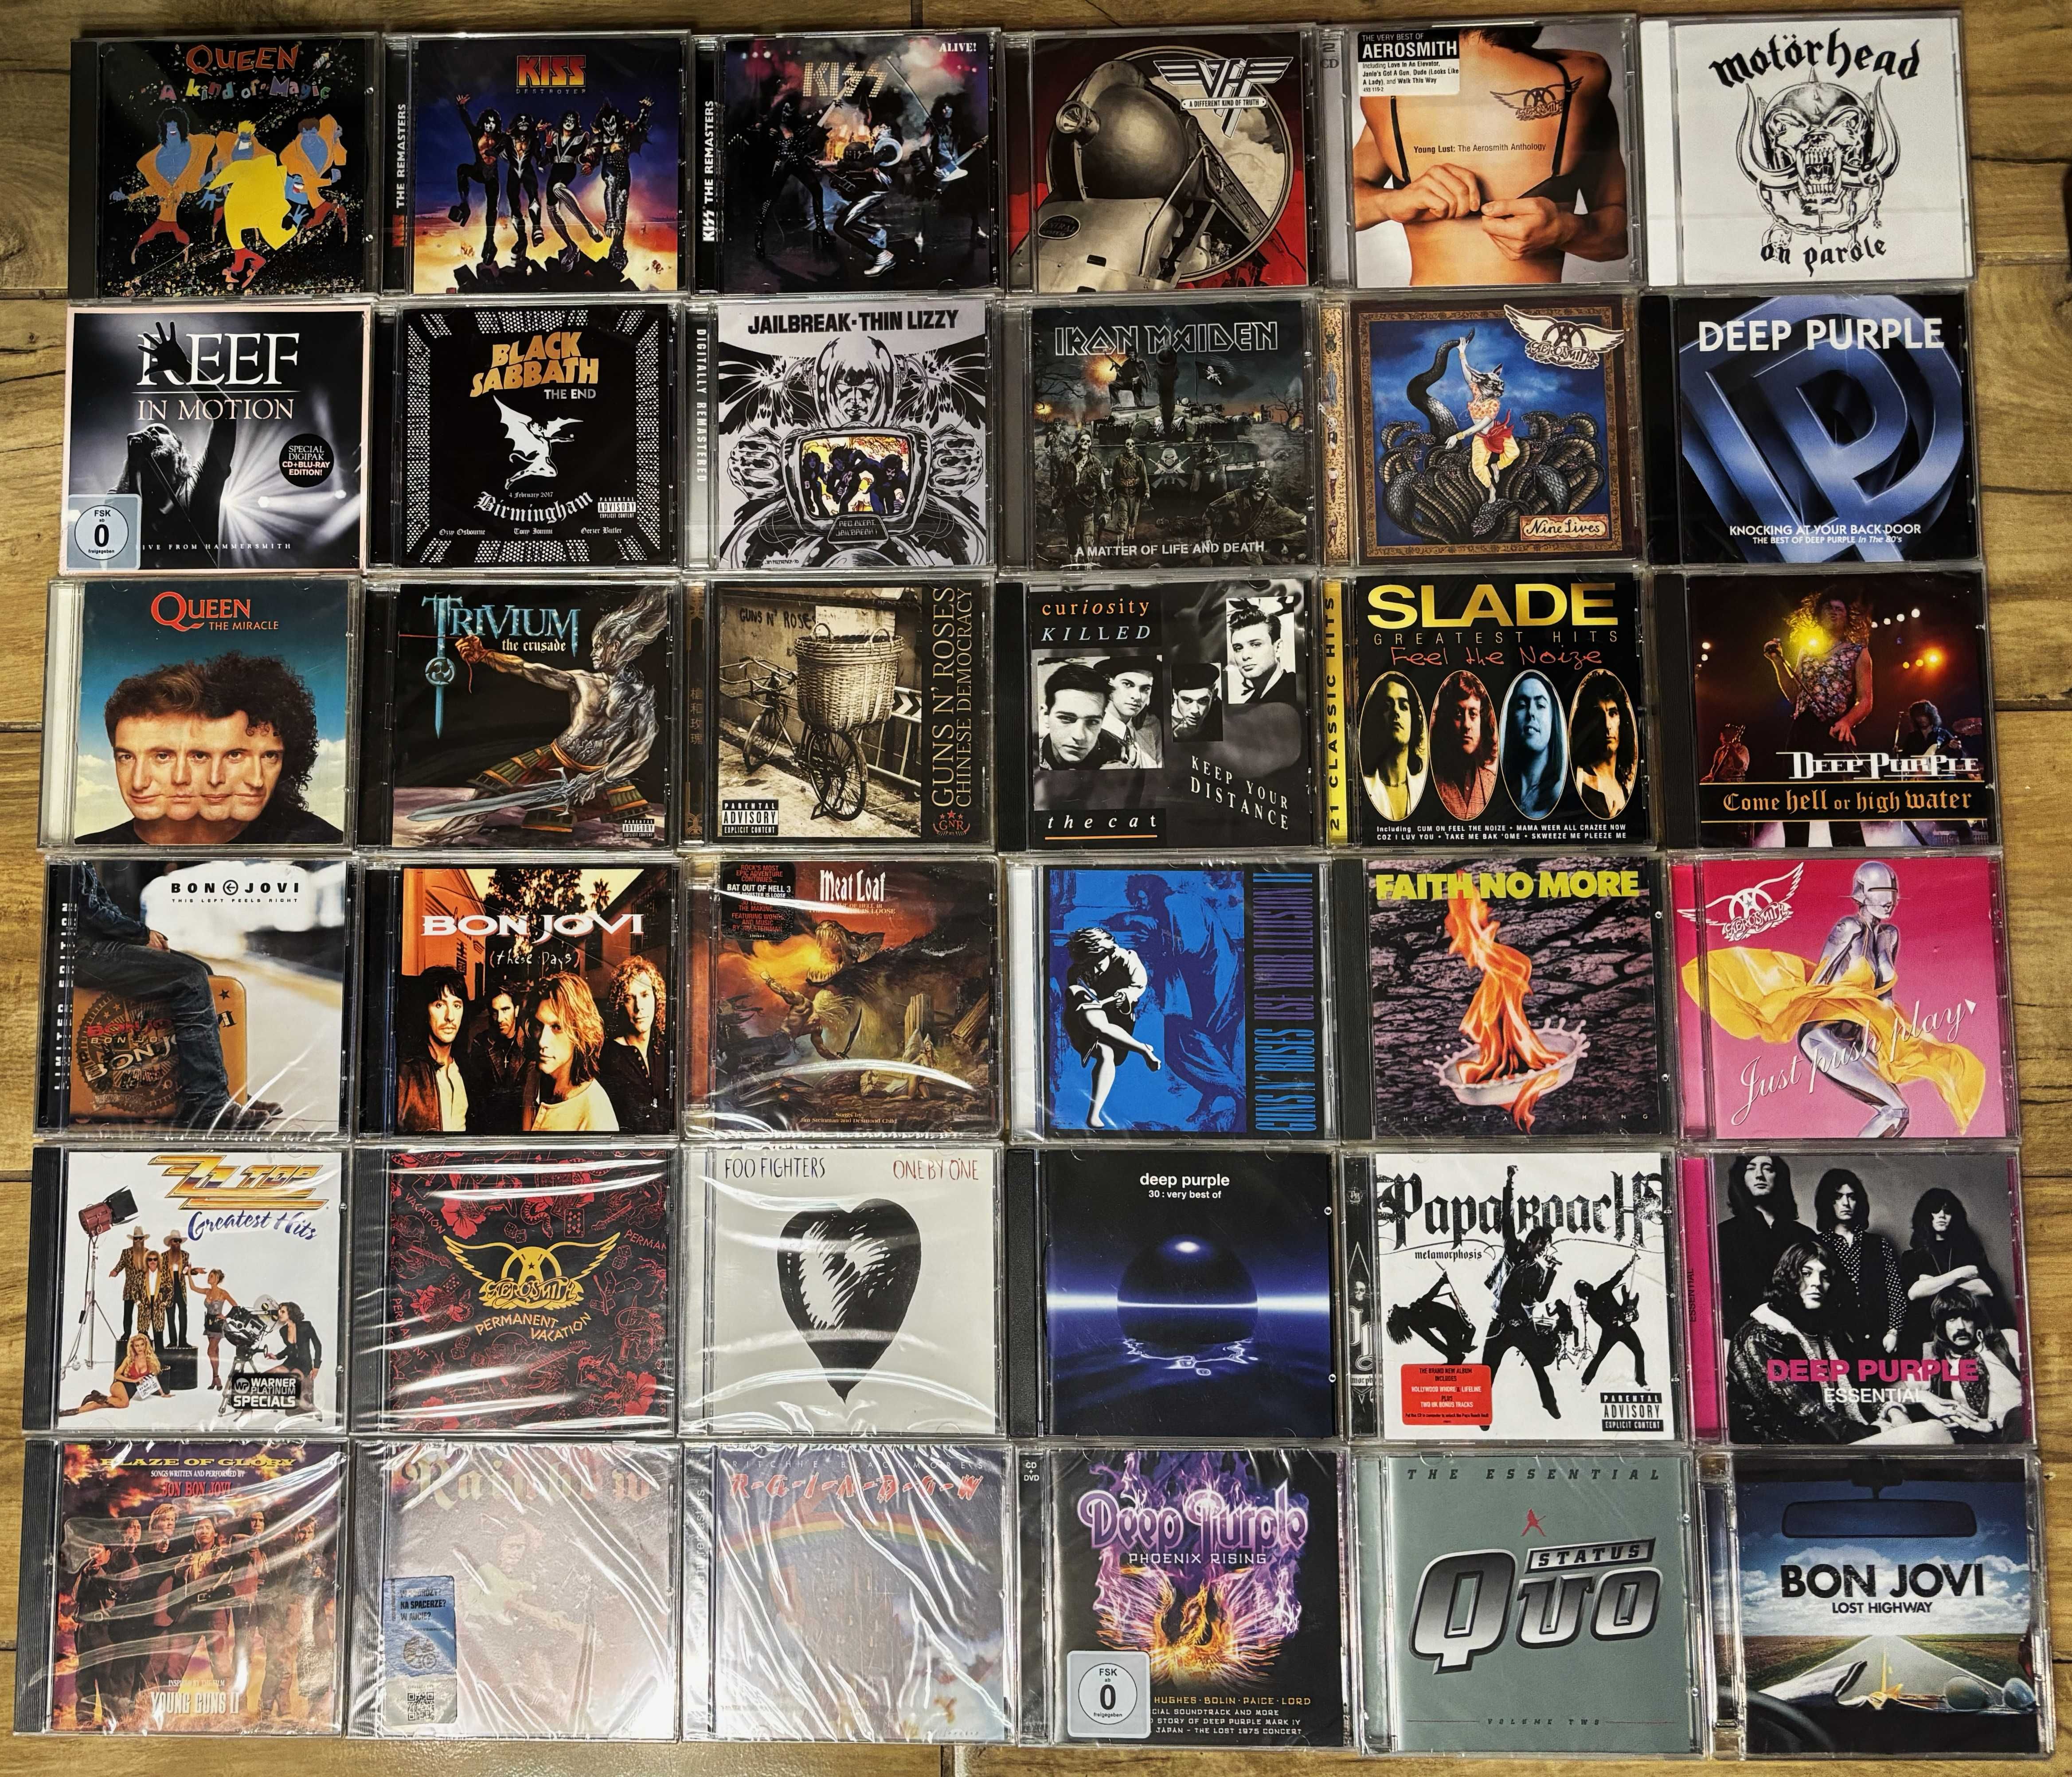 Super Album CD Legendy Rock-a -Podwójny Album CD Zespołu SWEET CD